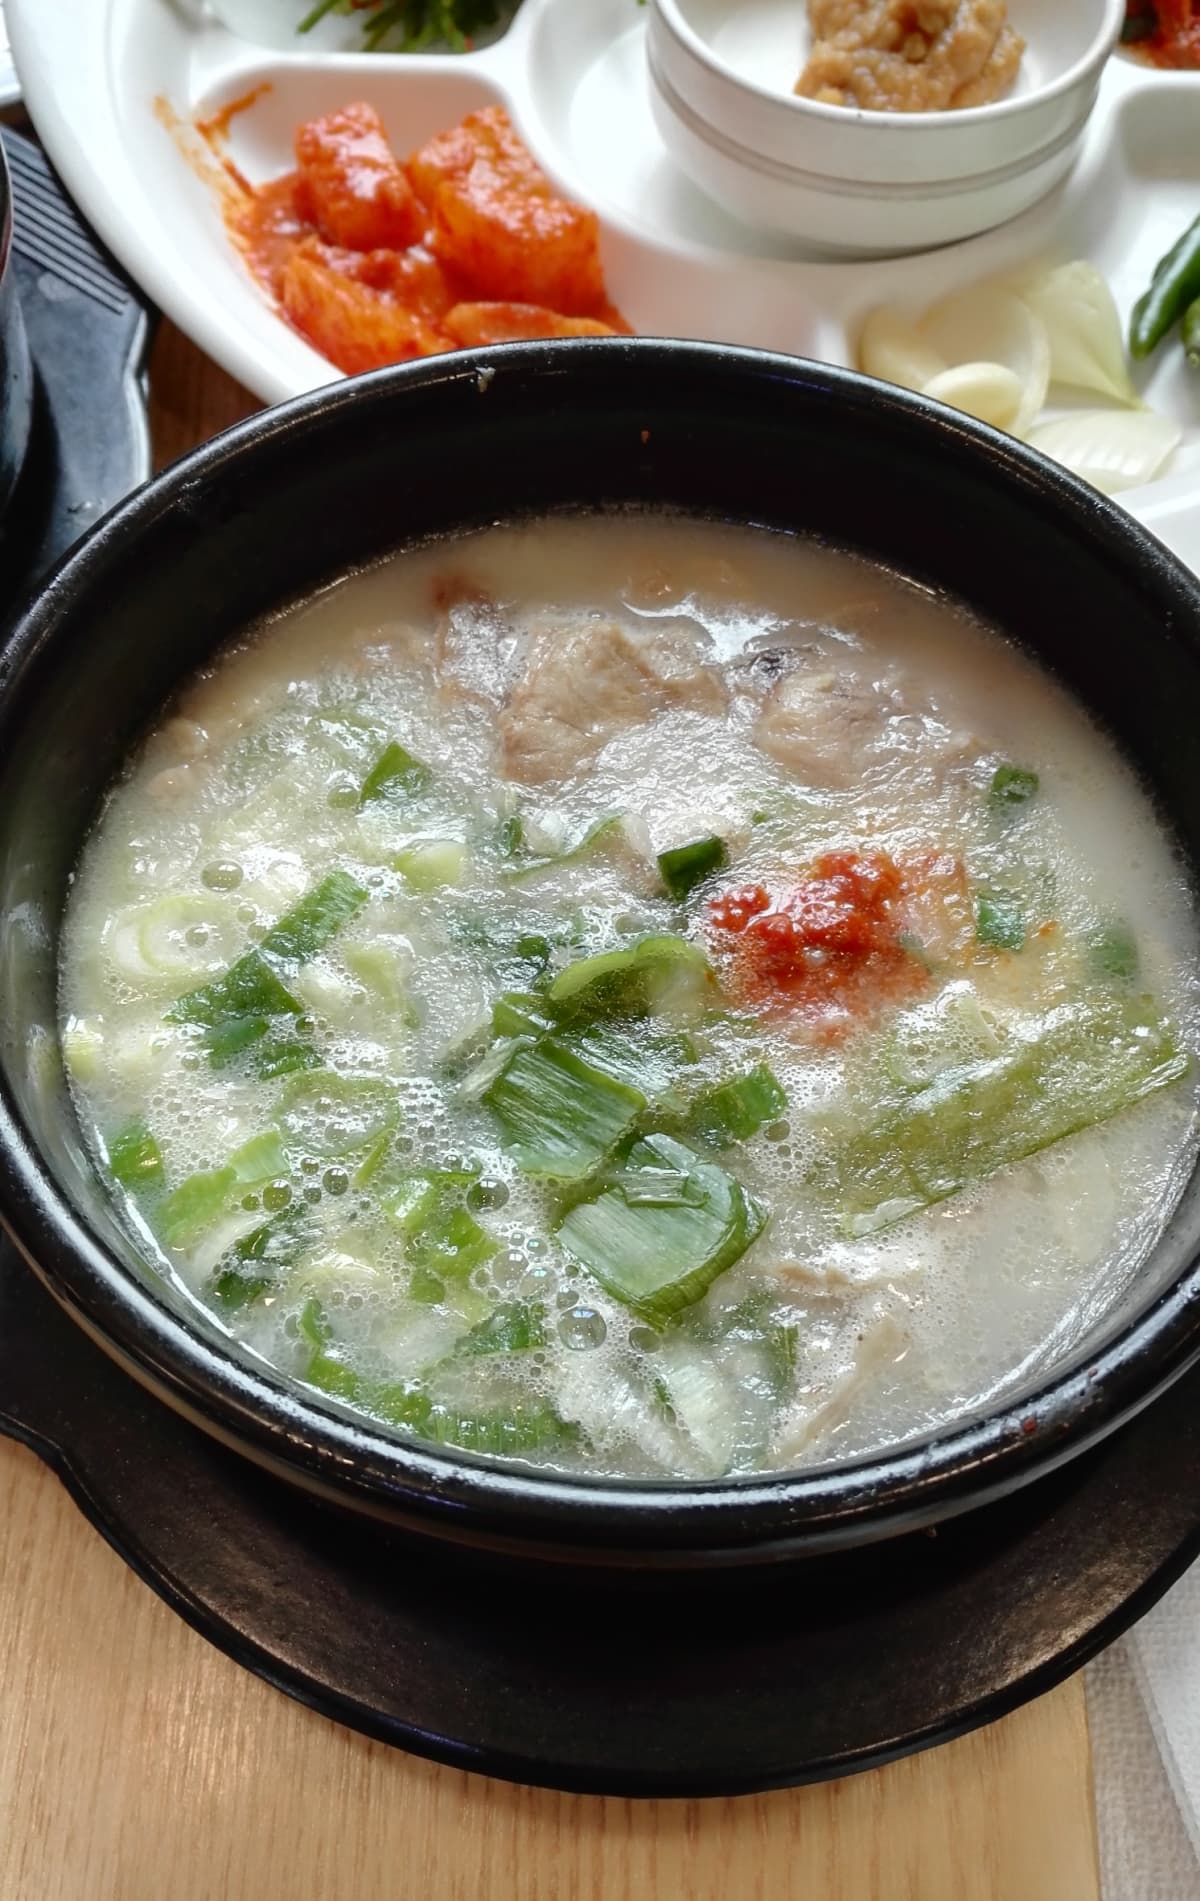 Busan, Korea famous Pork and Rice Soup (Dwaeji-gukbap)